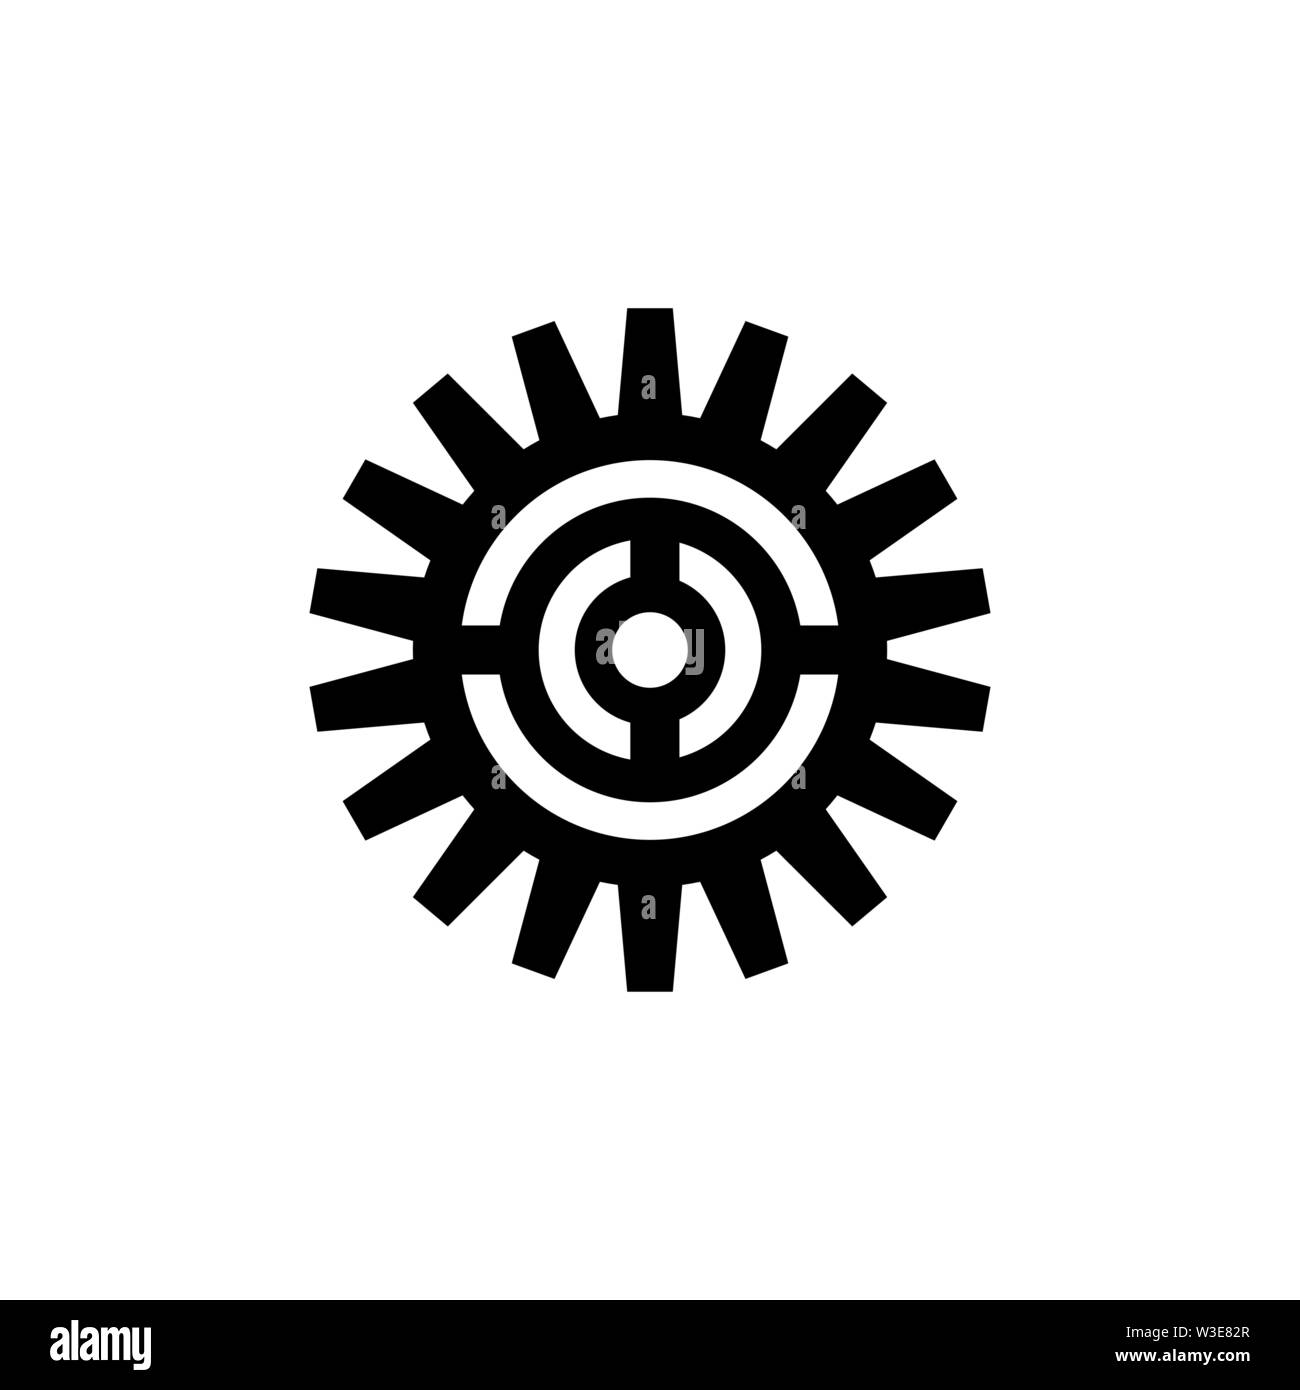 Bicycle Crank, Chainwheel. Flat Vector Icon illustration. Simple black symbol on white background. Bicycle Crank, Chainwheel sign design template for Stock Vector